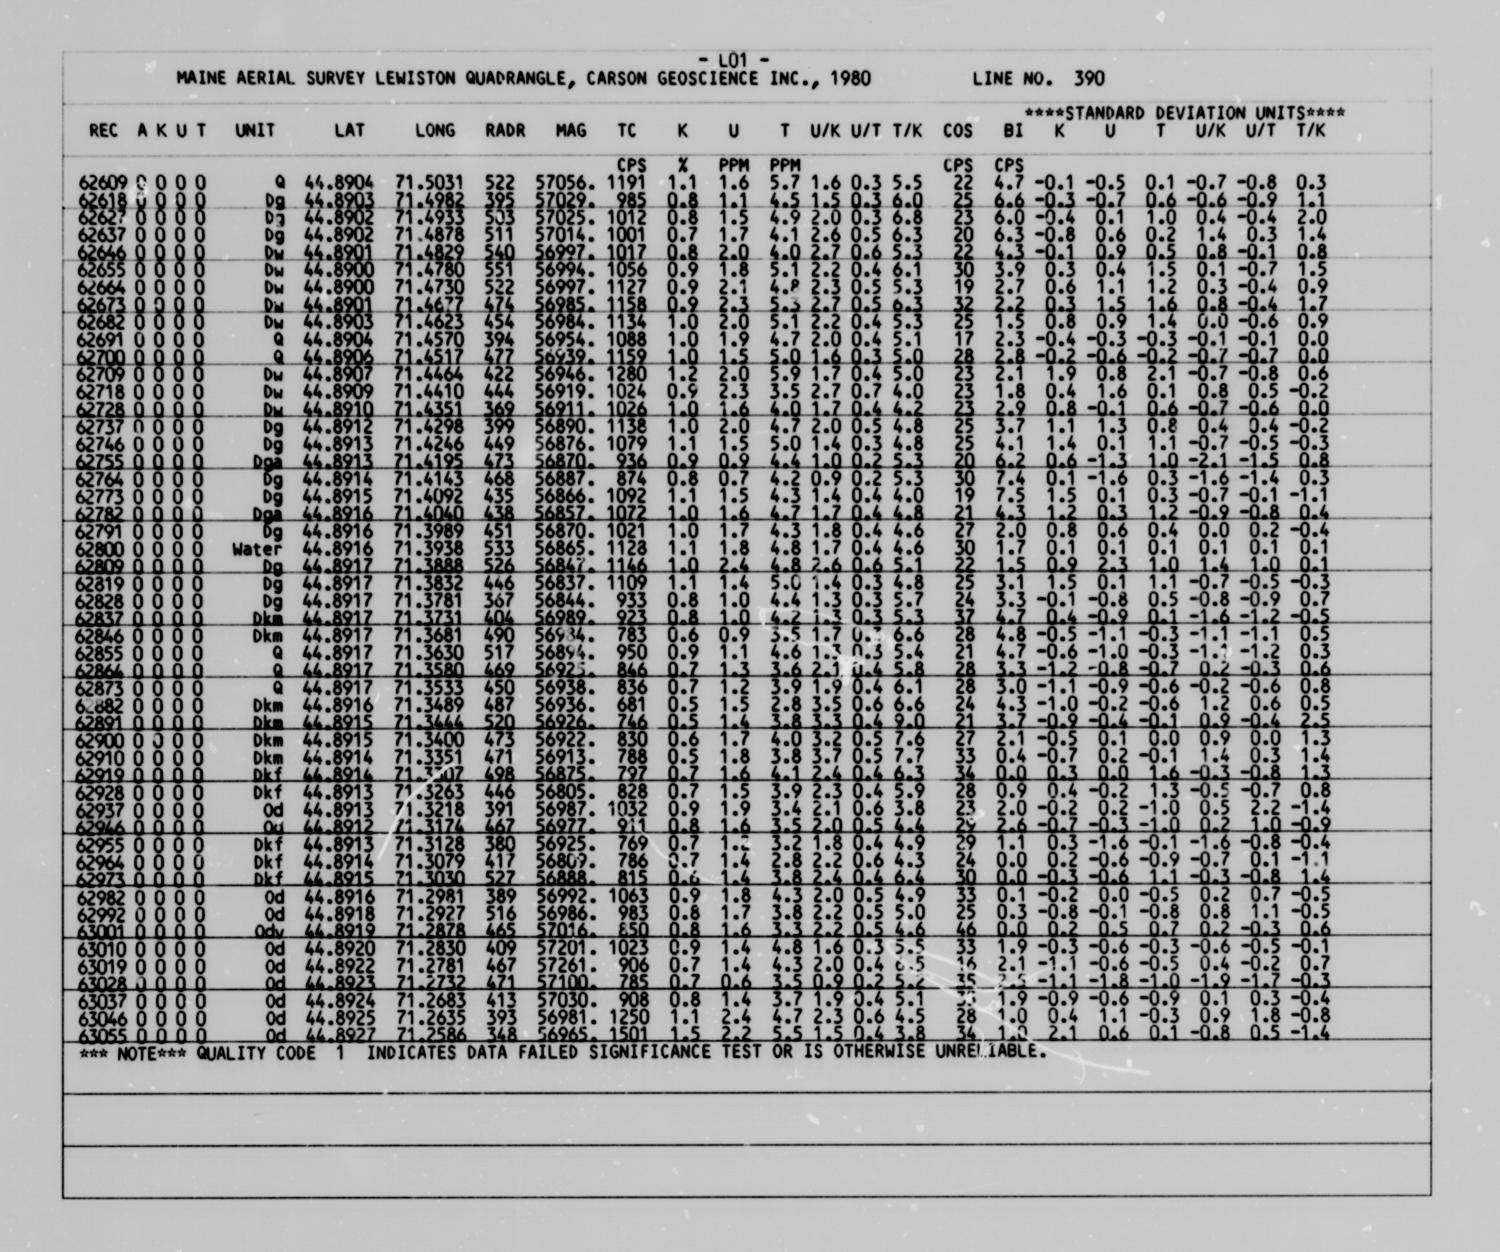 [Lewiston Quadrangle: Average Record Data Listings]
                                                
                                                    [Sequence #]: 12 of 144
                                                